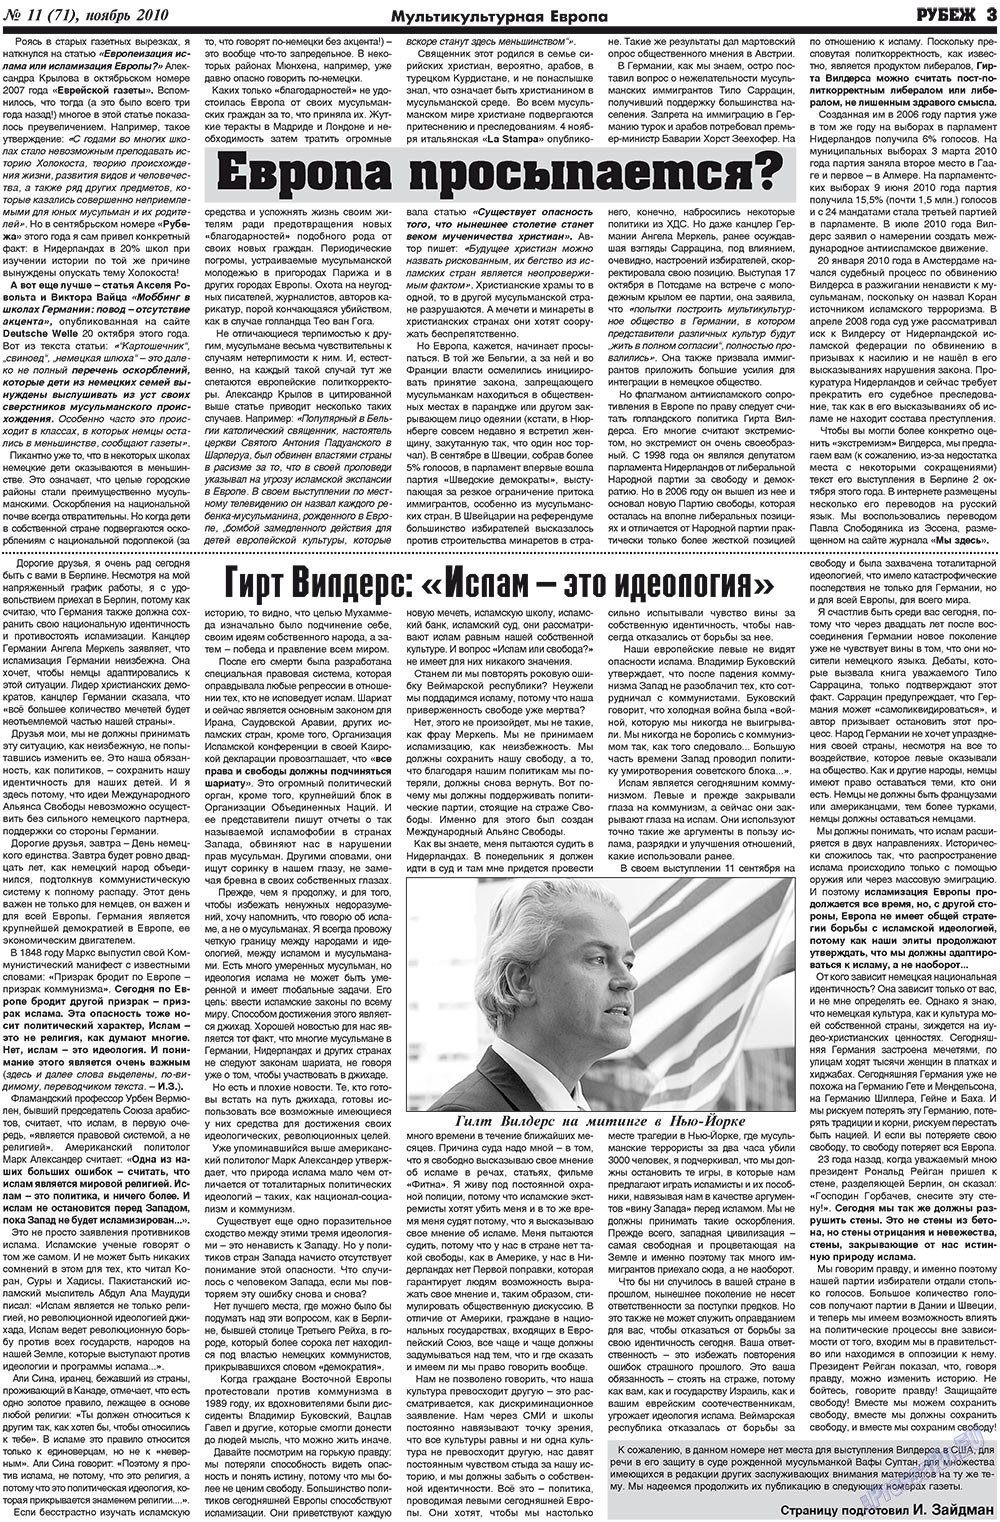 Рубеж, газета. 2010 №11 стр.3